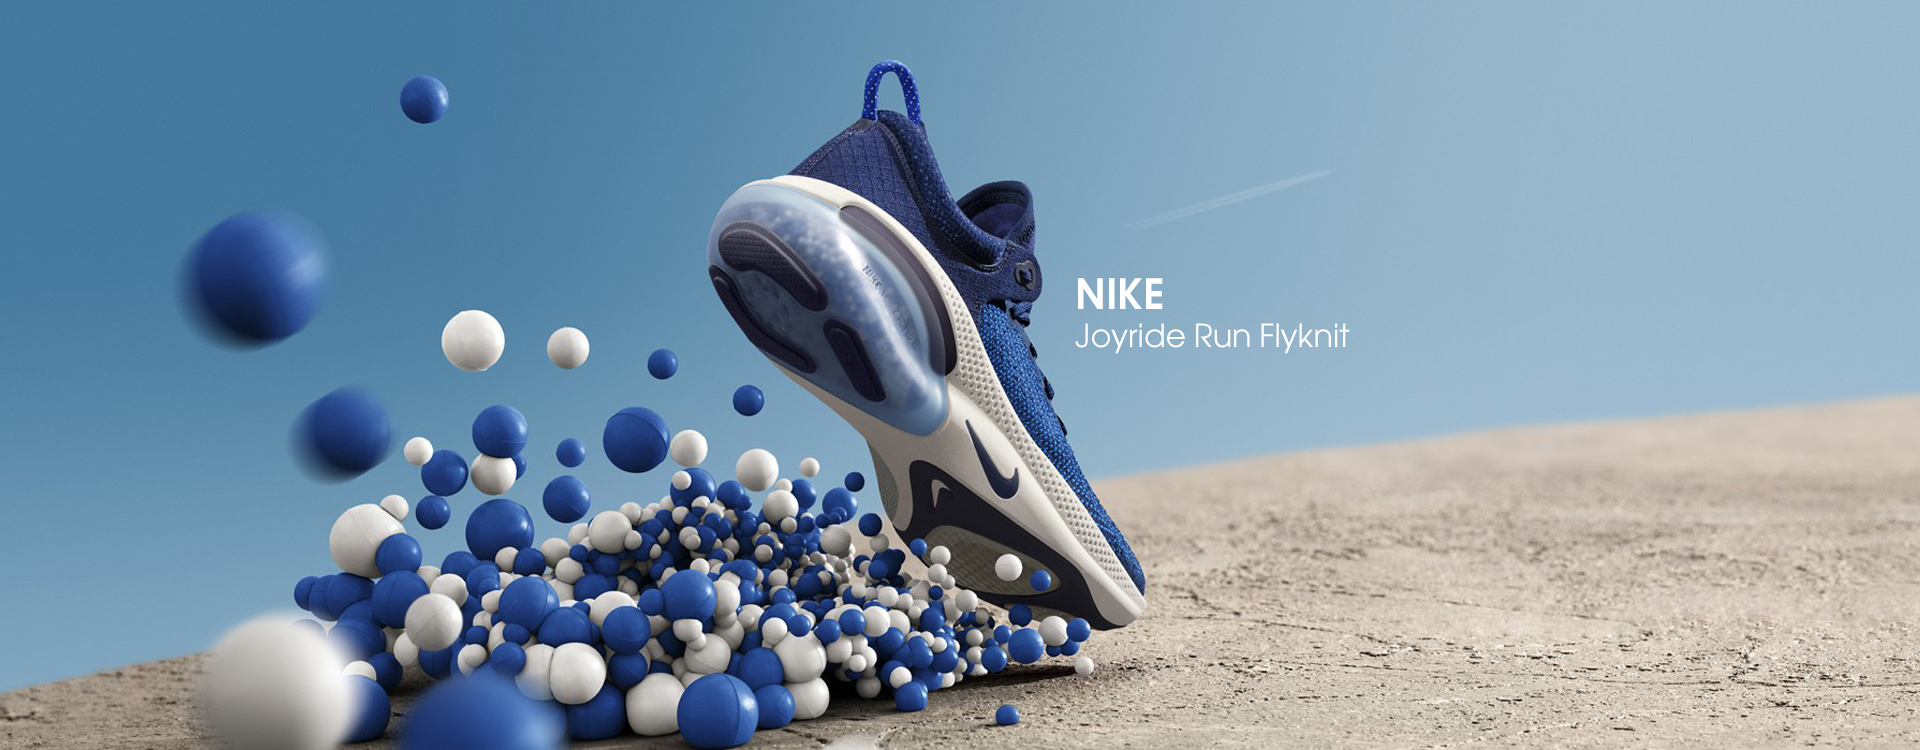 Кроссовки Nike Joyride Run Flyknit “Racer Blue”